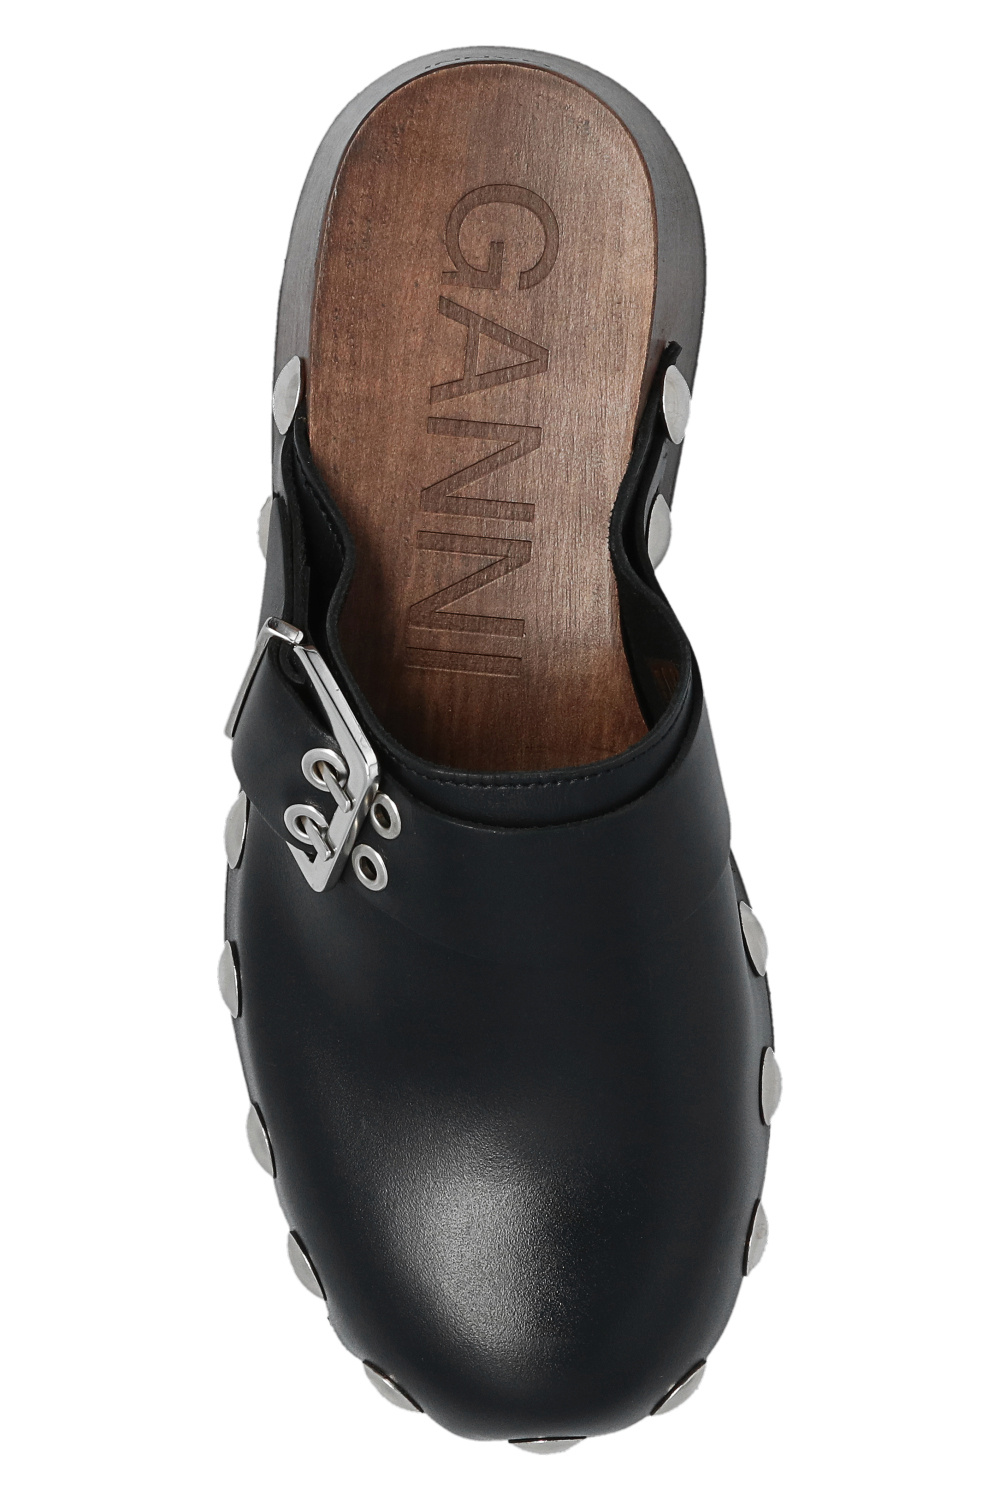 LOUIS VUITTON Black Leather Studs Sandal Flat Shoes EUR Size 36 JAPAN USED